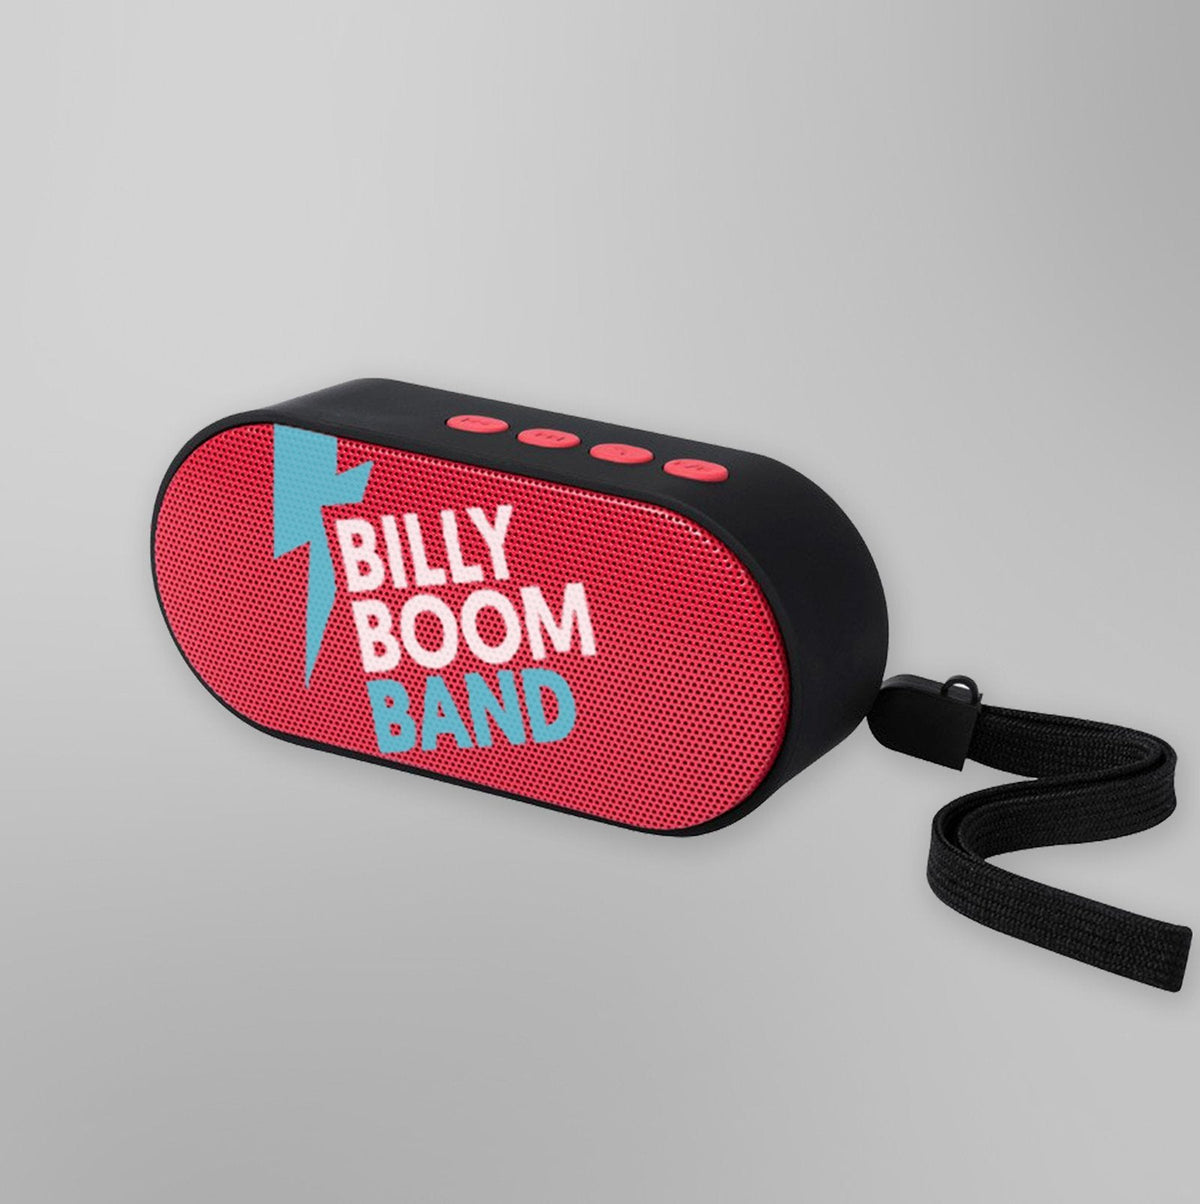 Altavoz Bluetooth Rayo - The Fandation - Billy Boom Band